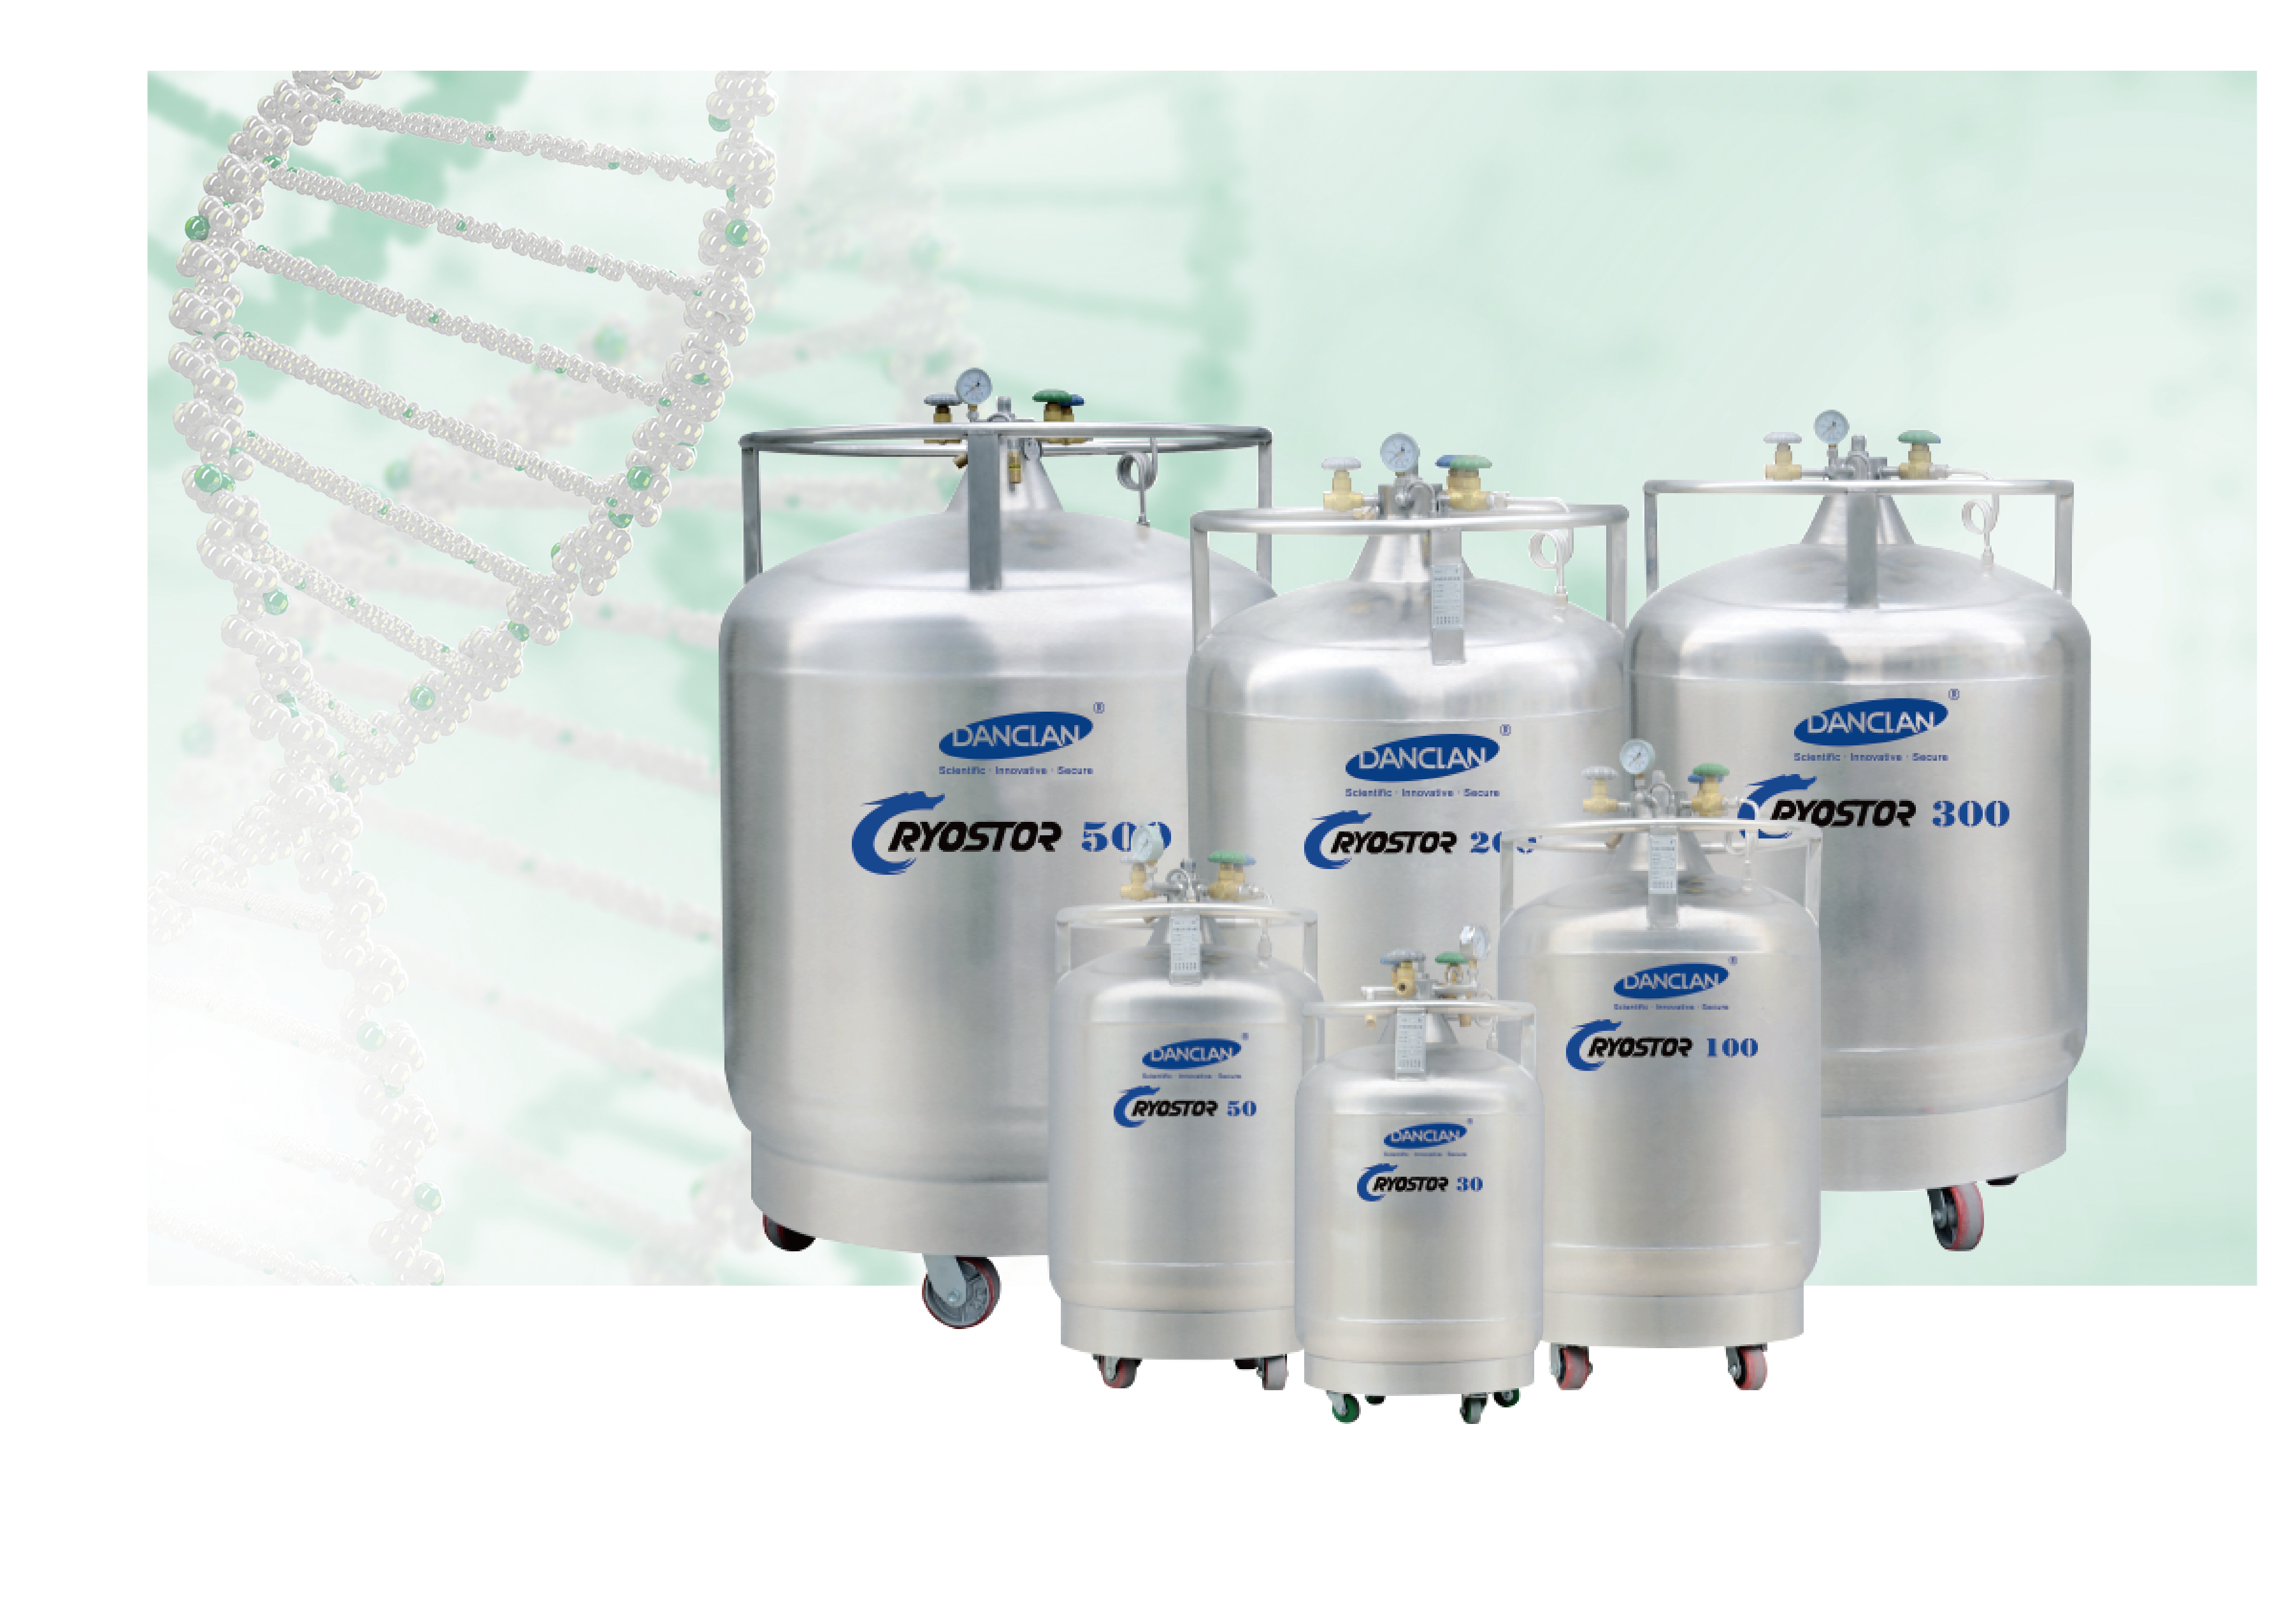 Danclan Liquid Nitrogen Supply Tank - Cryostor Series